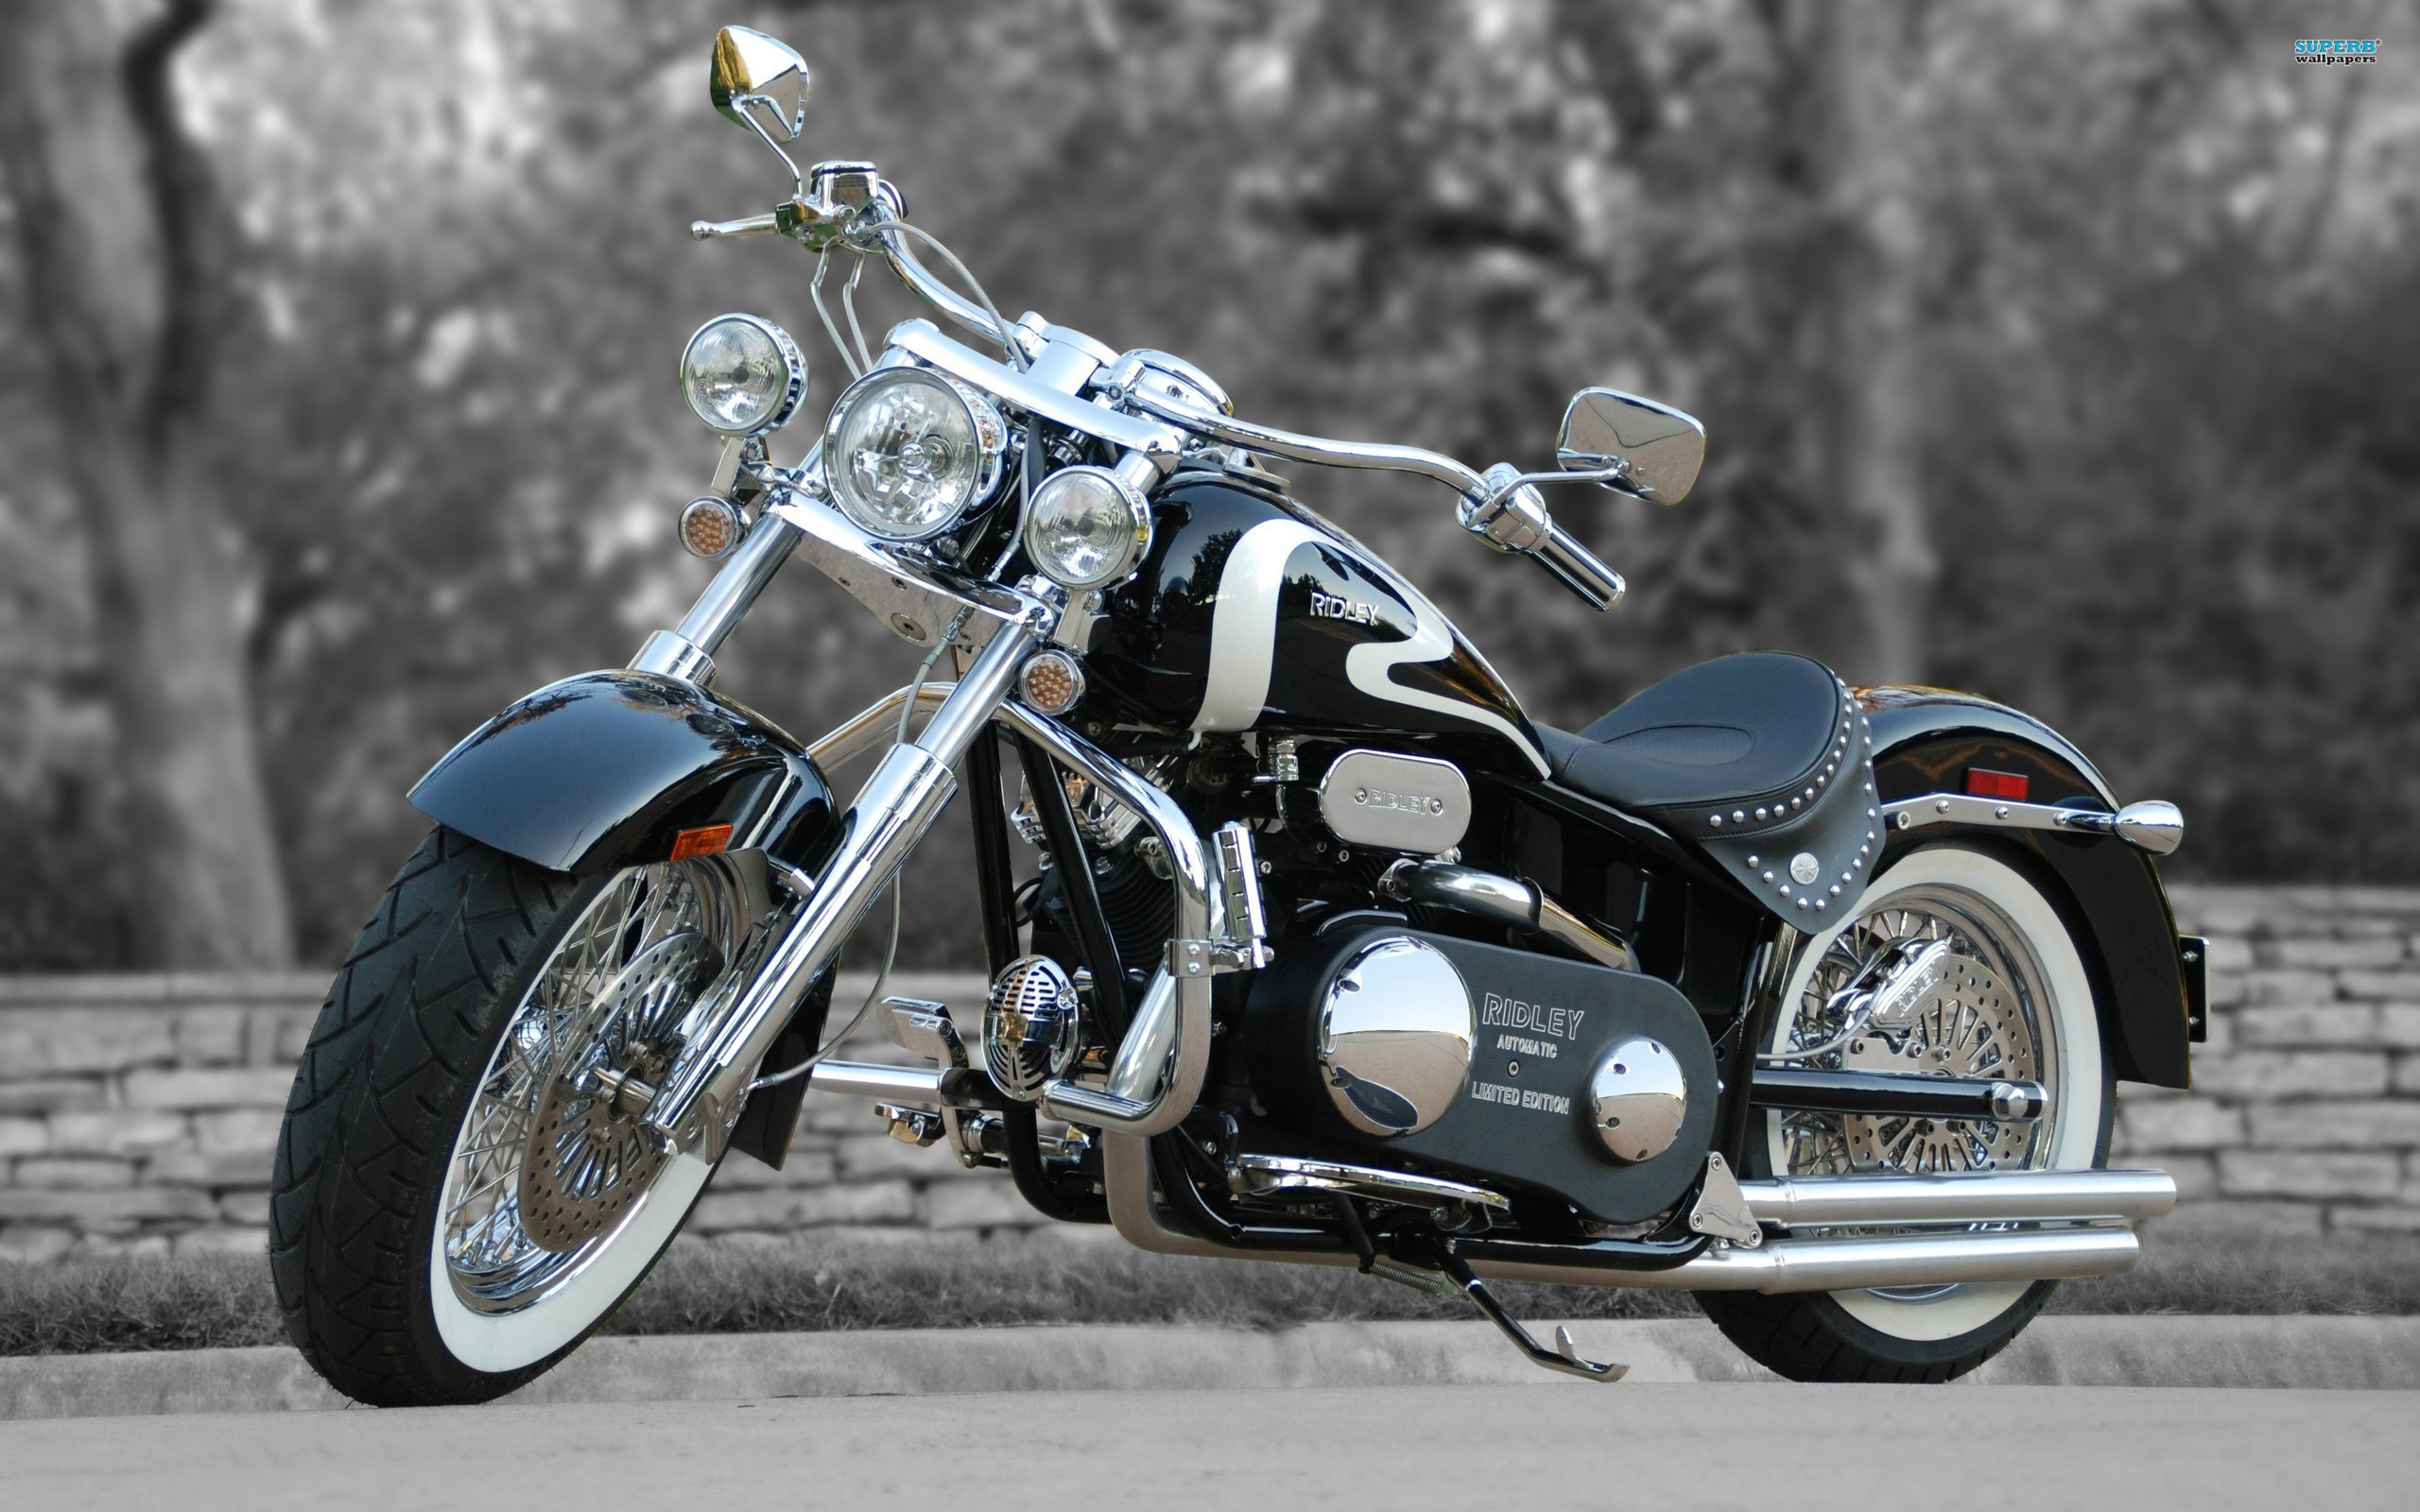 2560x1600 Harley Davidson E Girls Ridley Chopper Motorcycle 897778 2560Ã1600